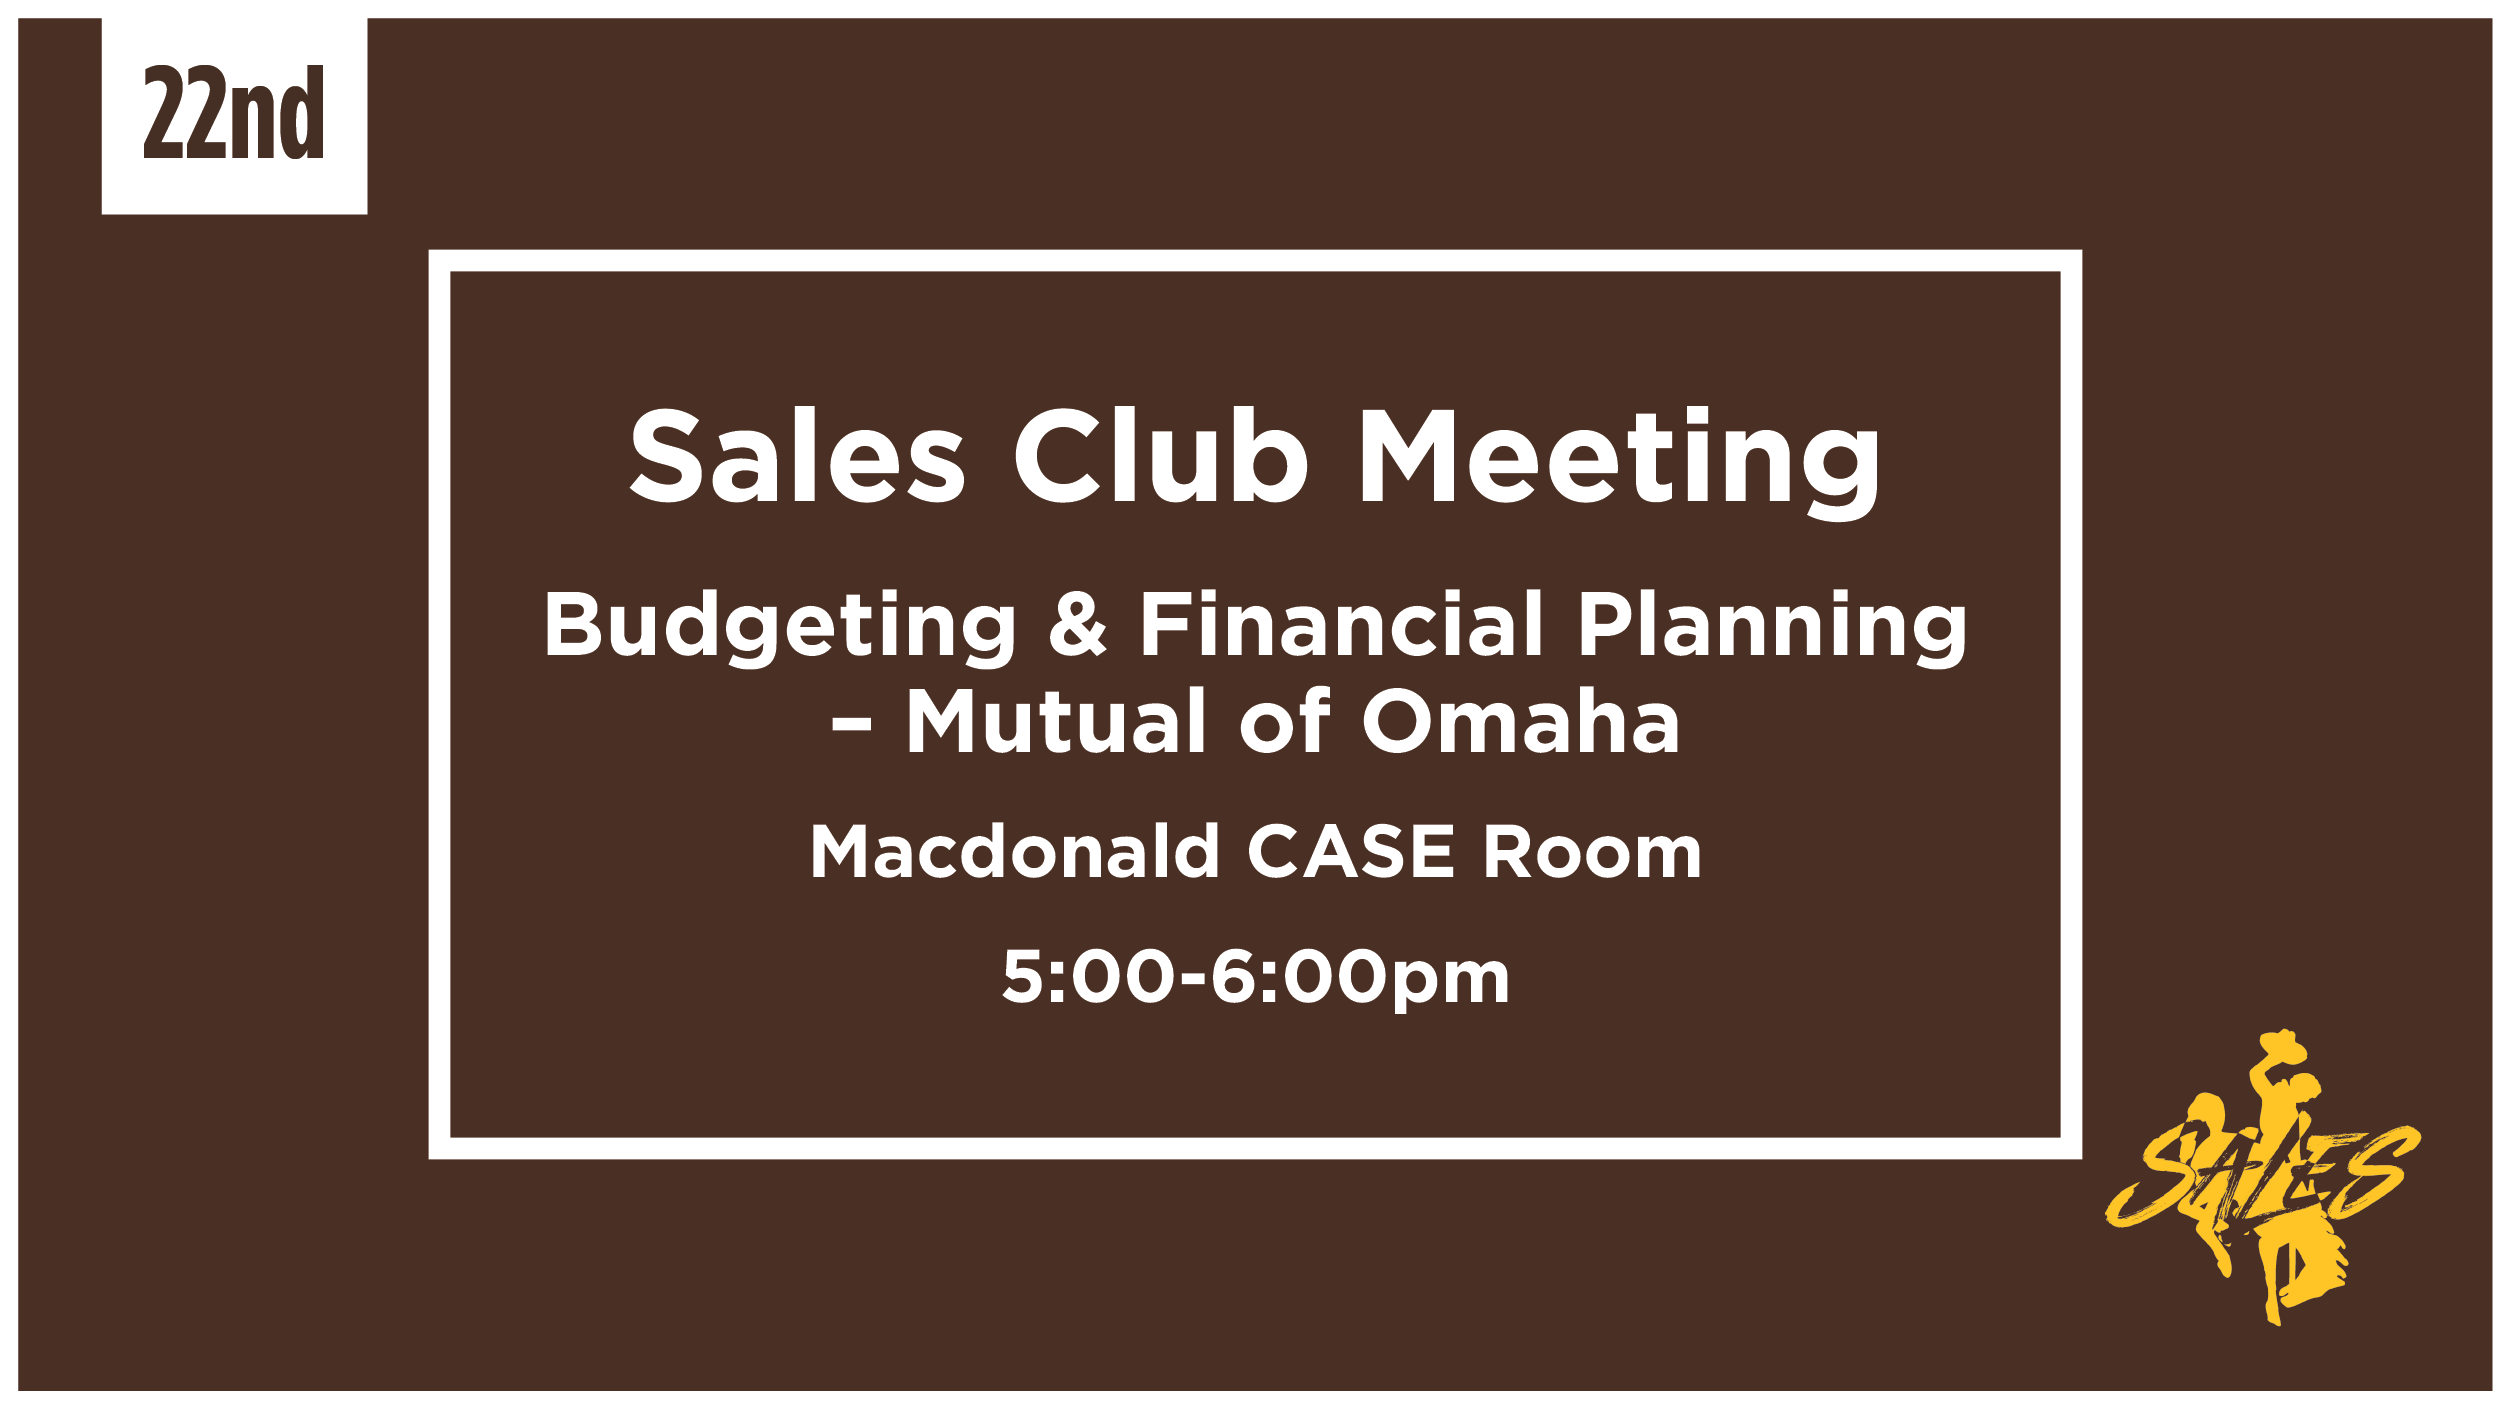 Sales Club Meeting March 22